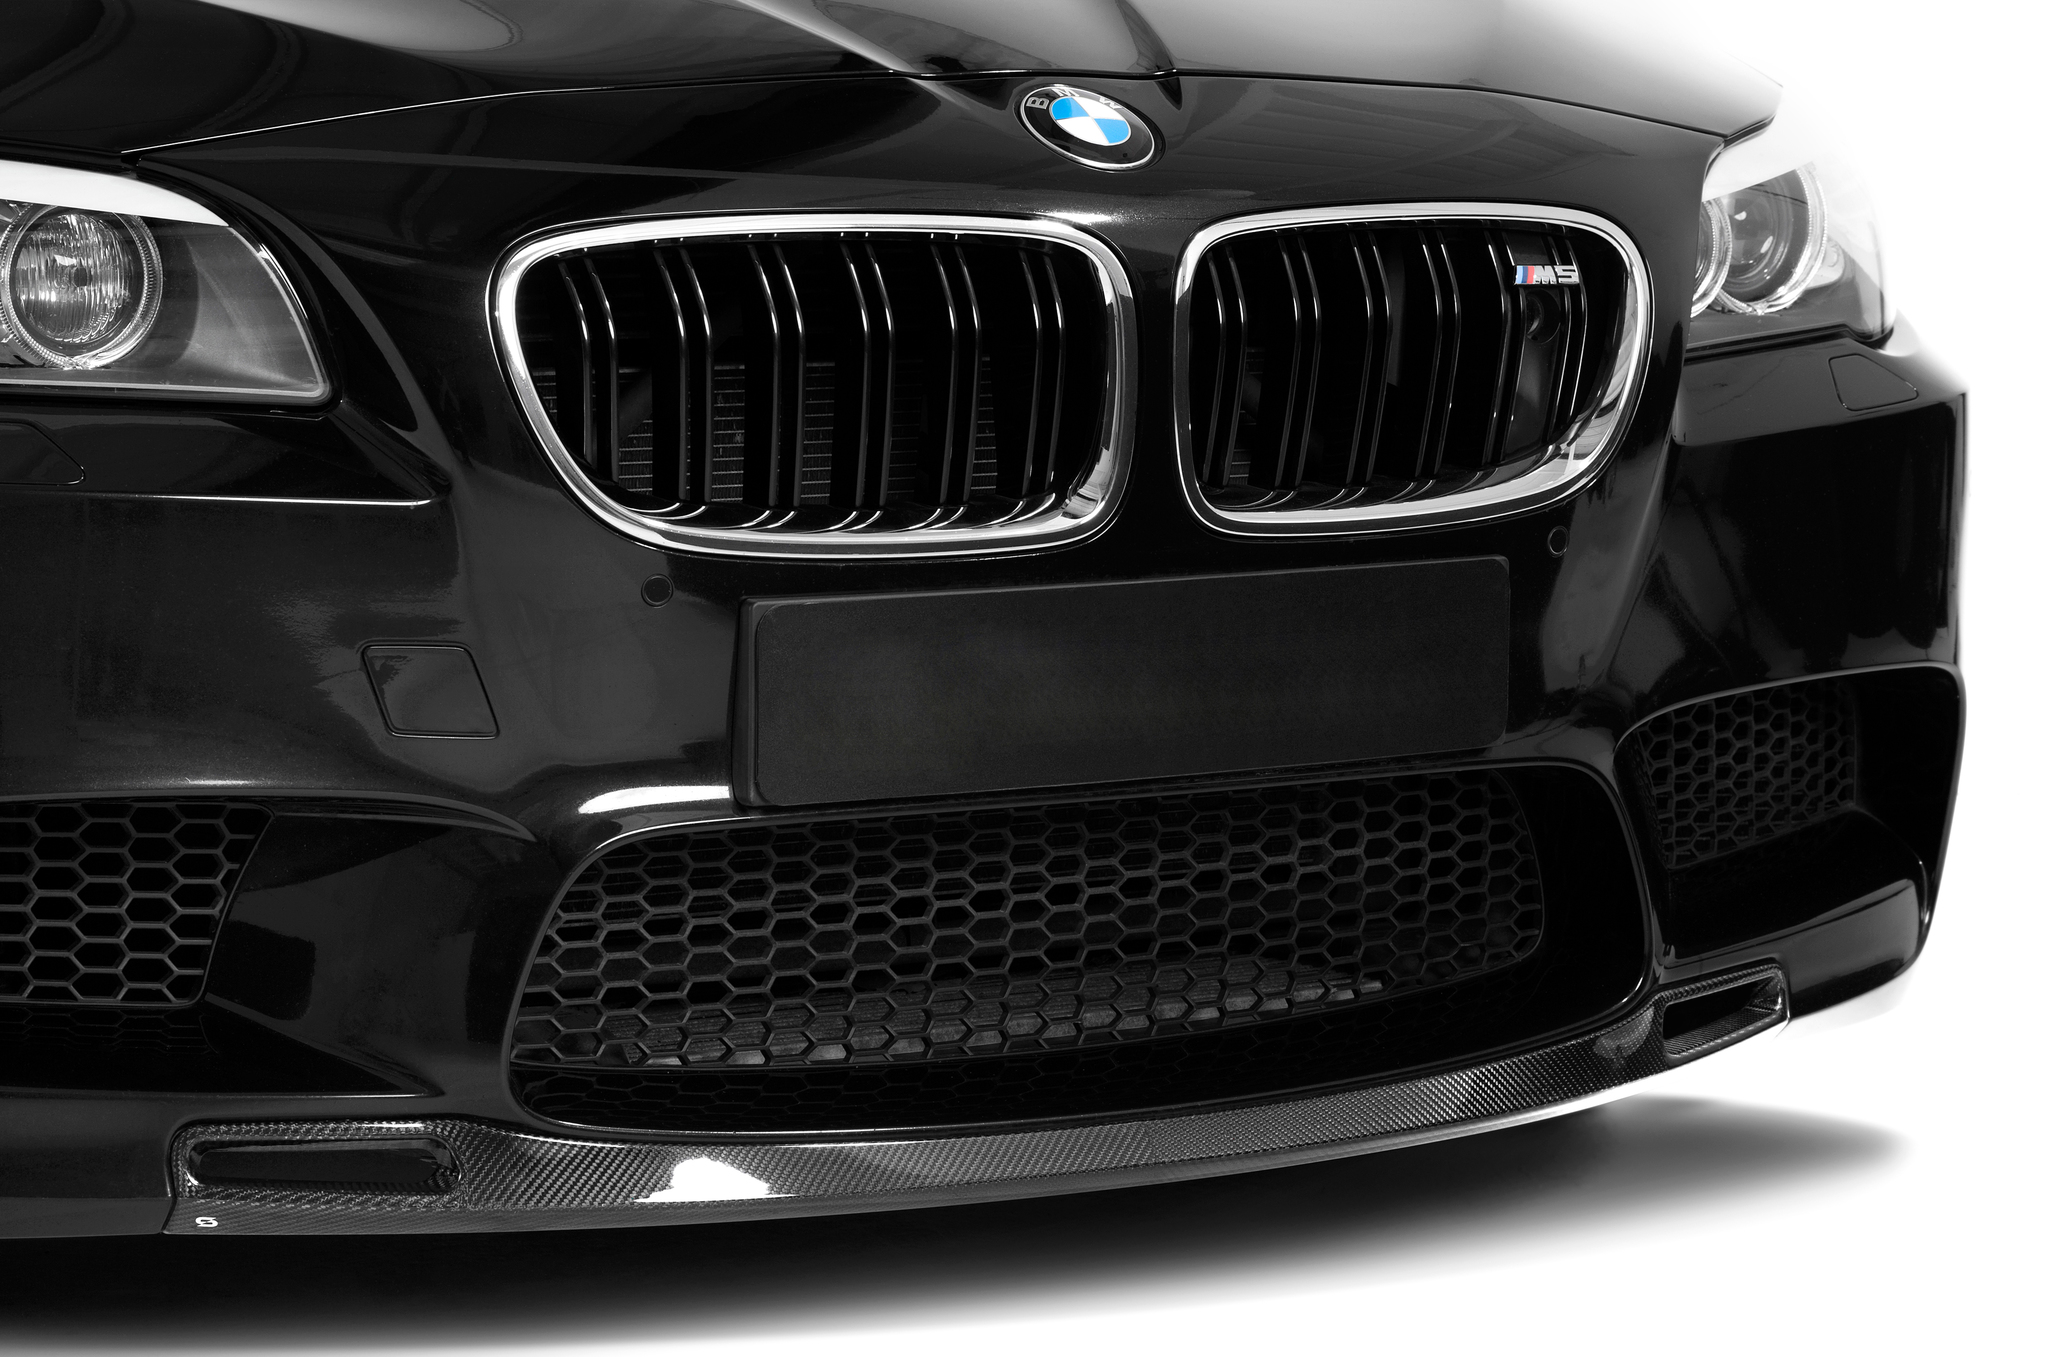 Sterckenn Carbon Fiber front lip for BMW M5 F10 latest model